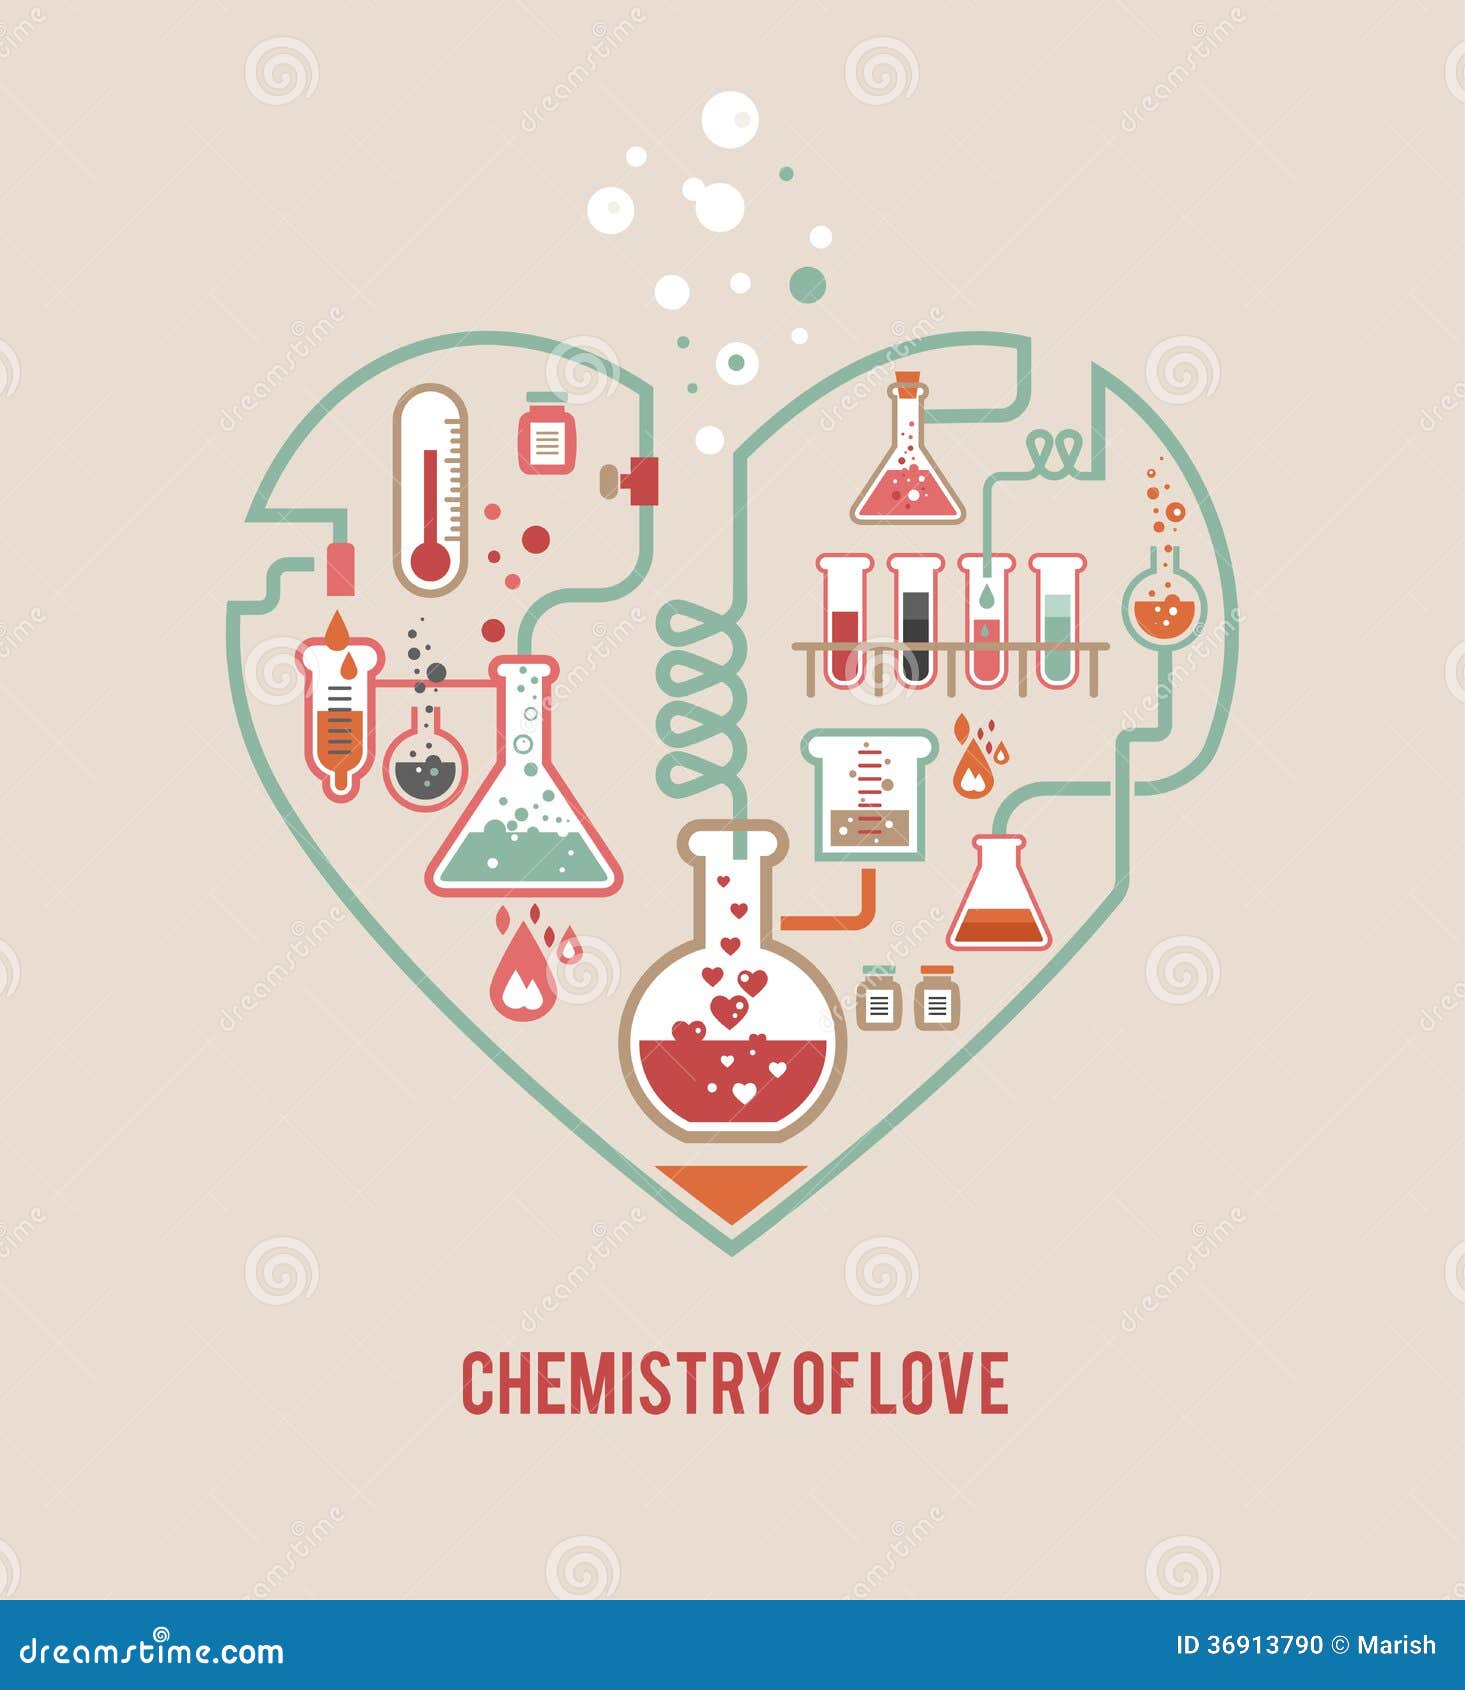 chemistry of love